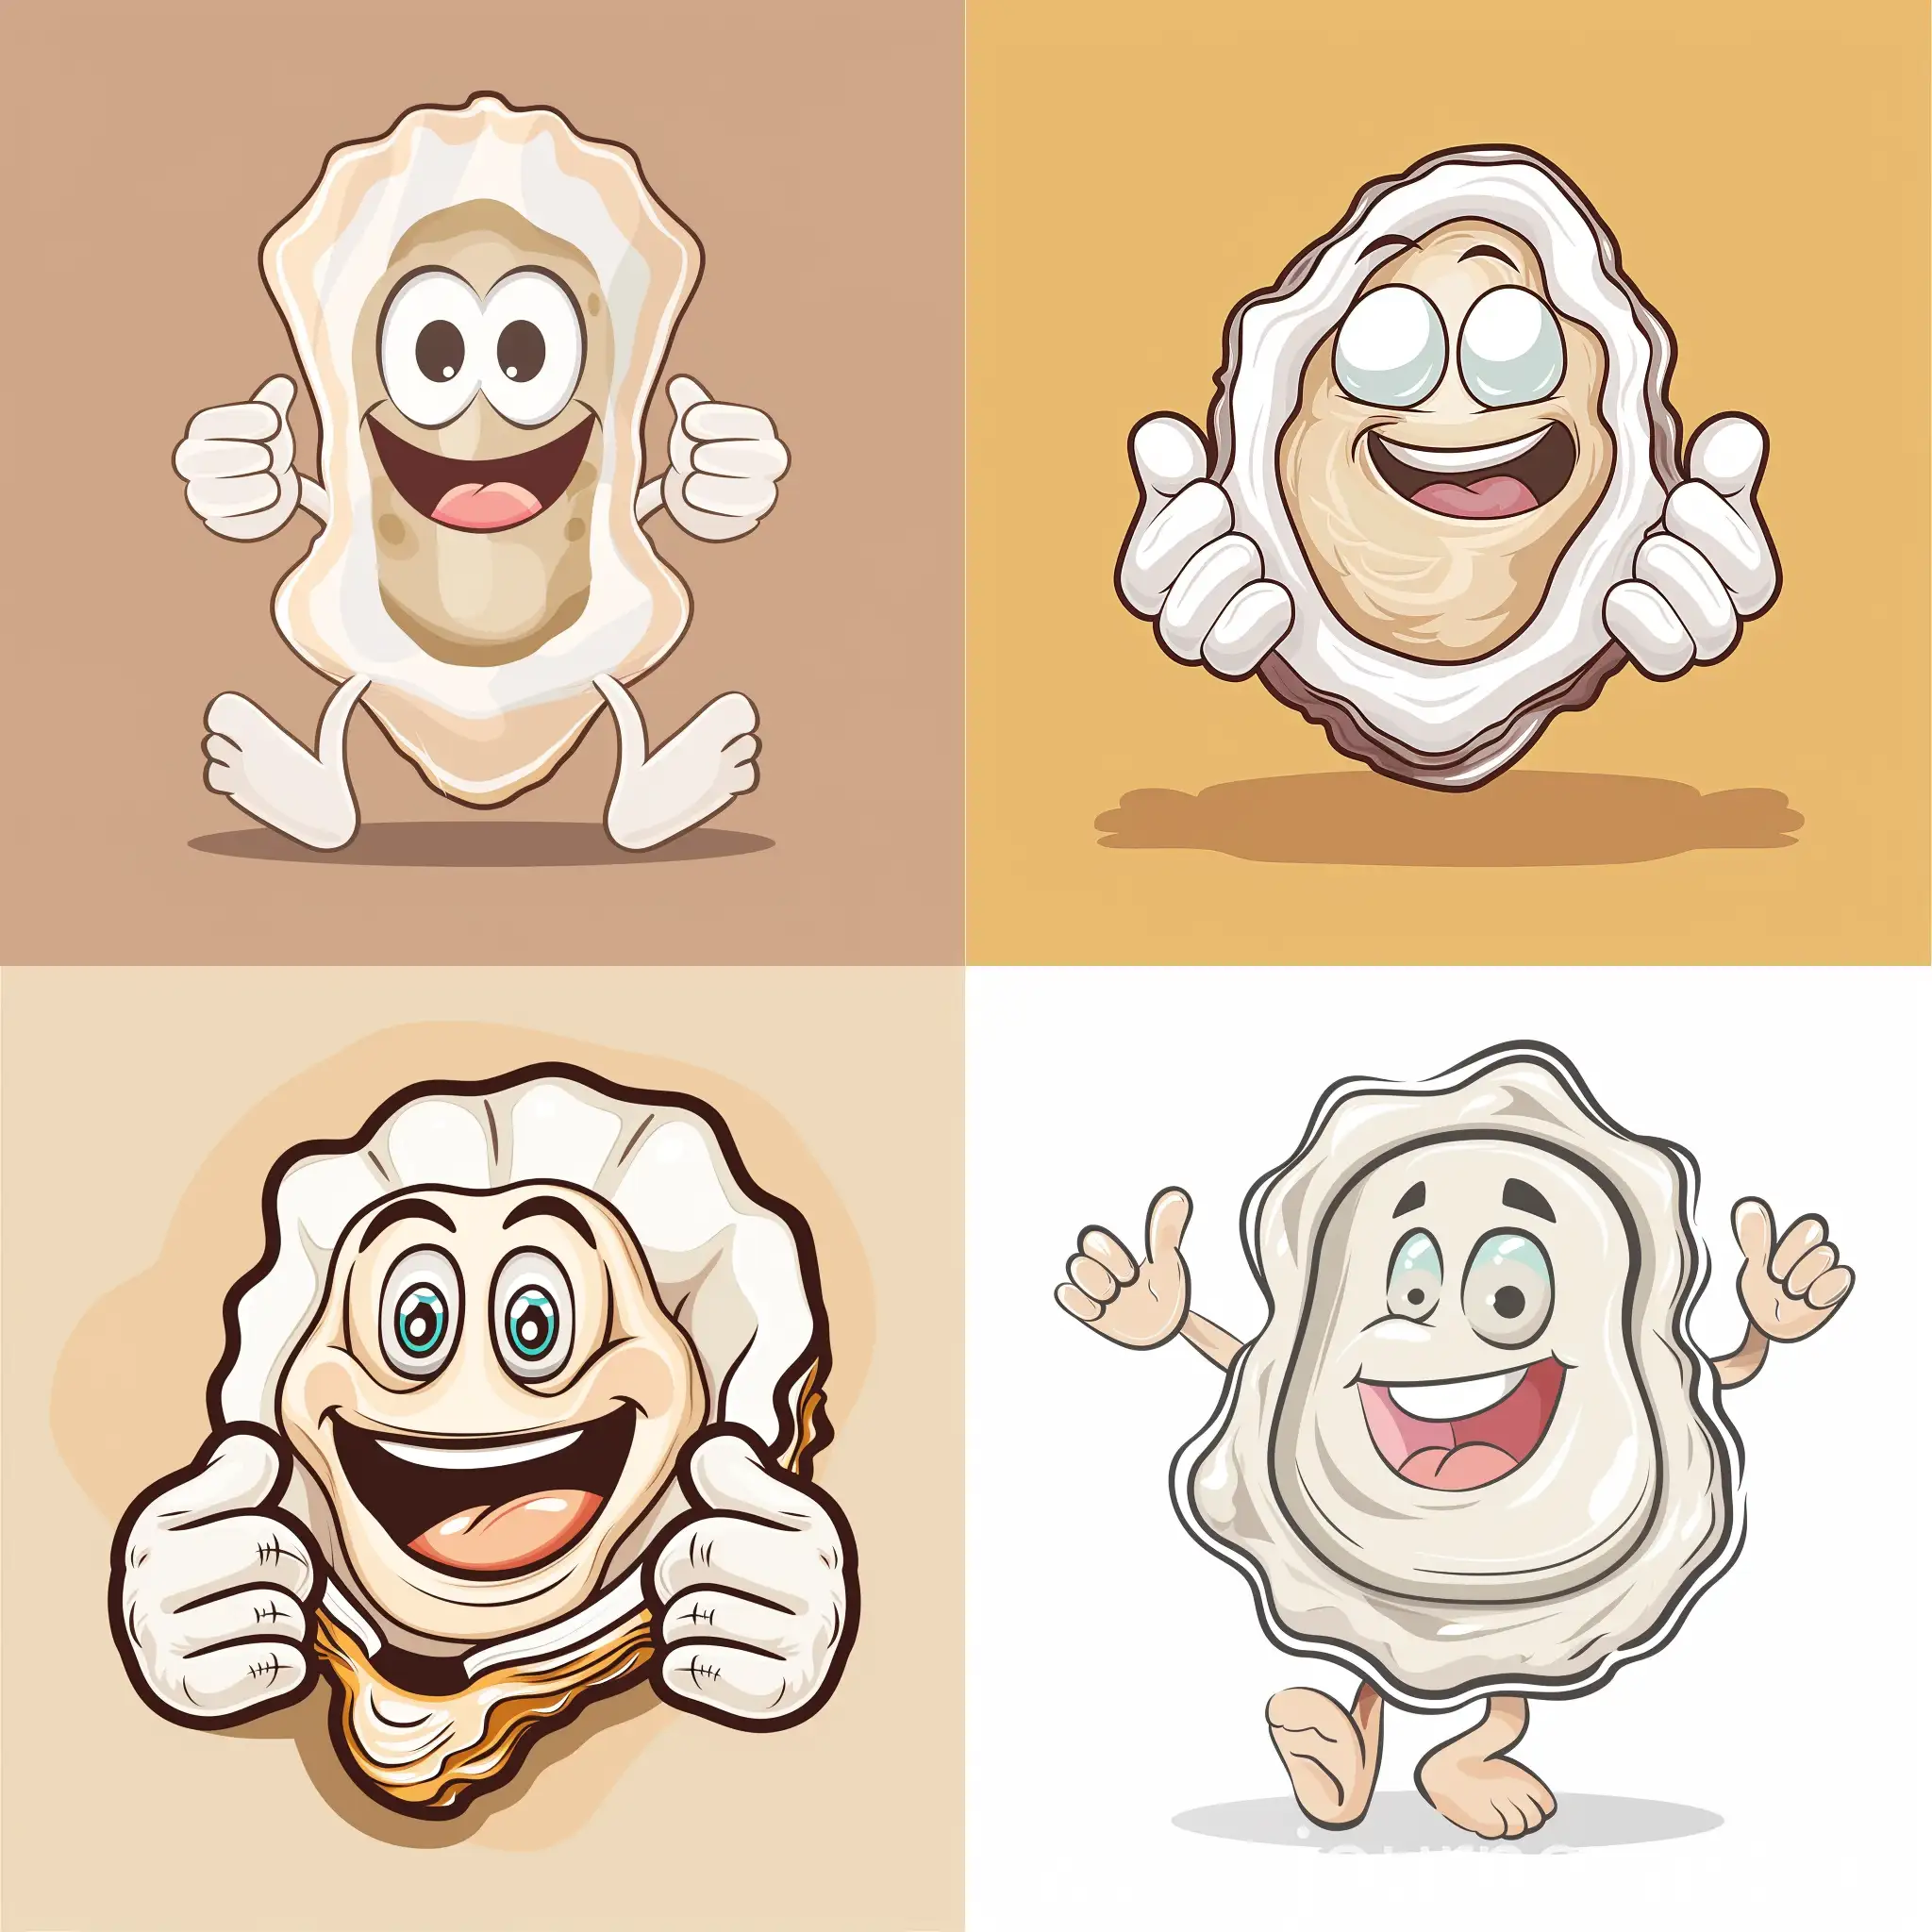 Anthropomorphic-Oyster-Emoji-Flat-Illustration-with-Disney-Cartoon-Style